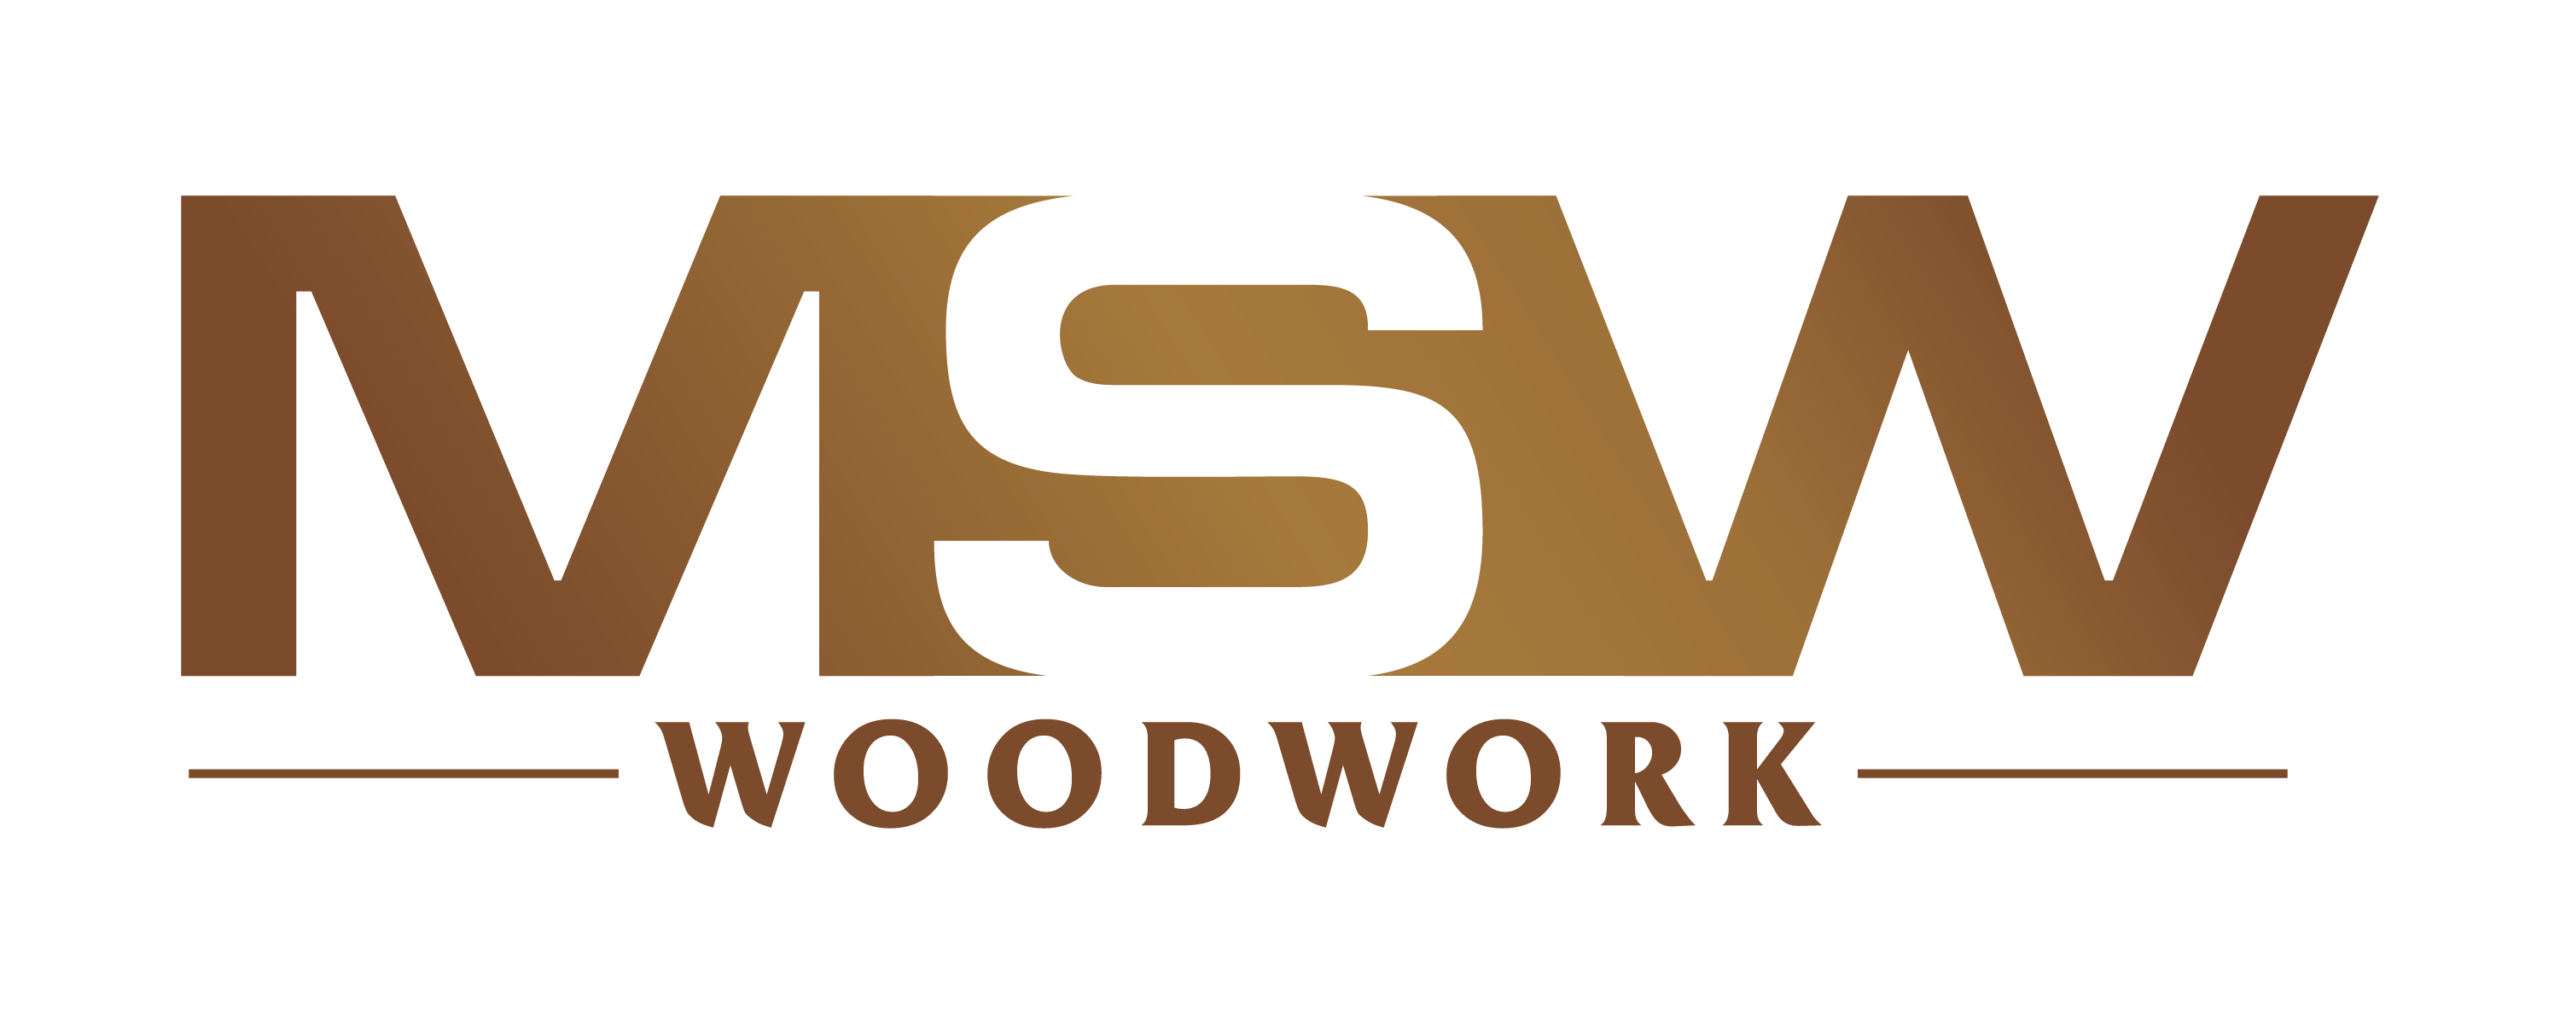 ProSites-MSW-Woodwork-01-1